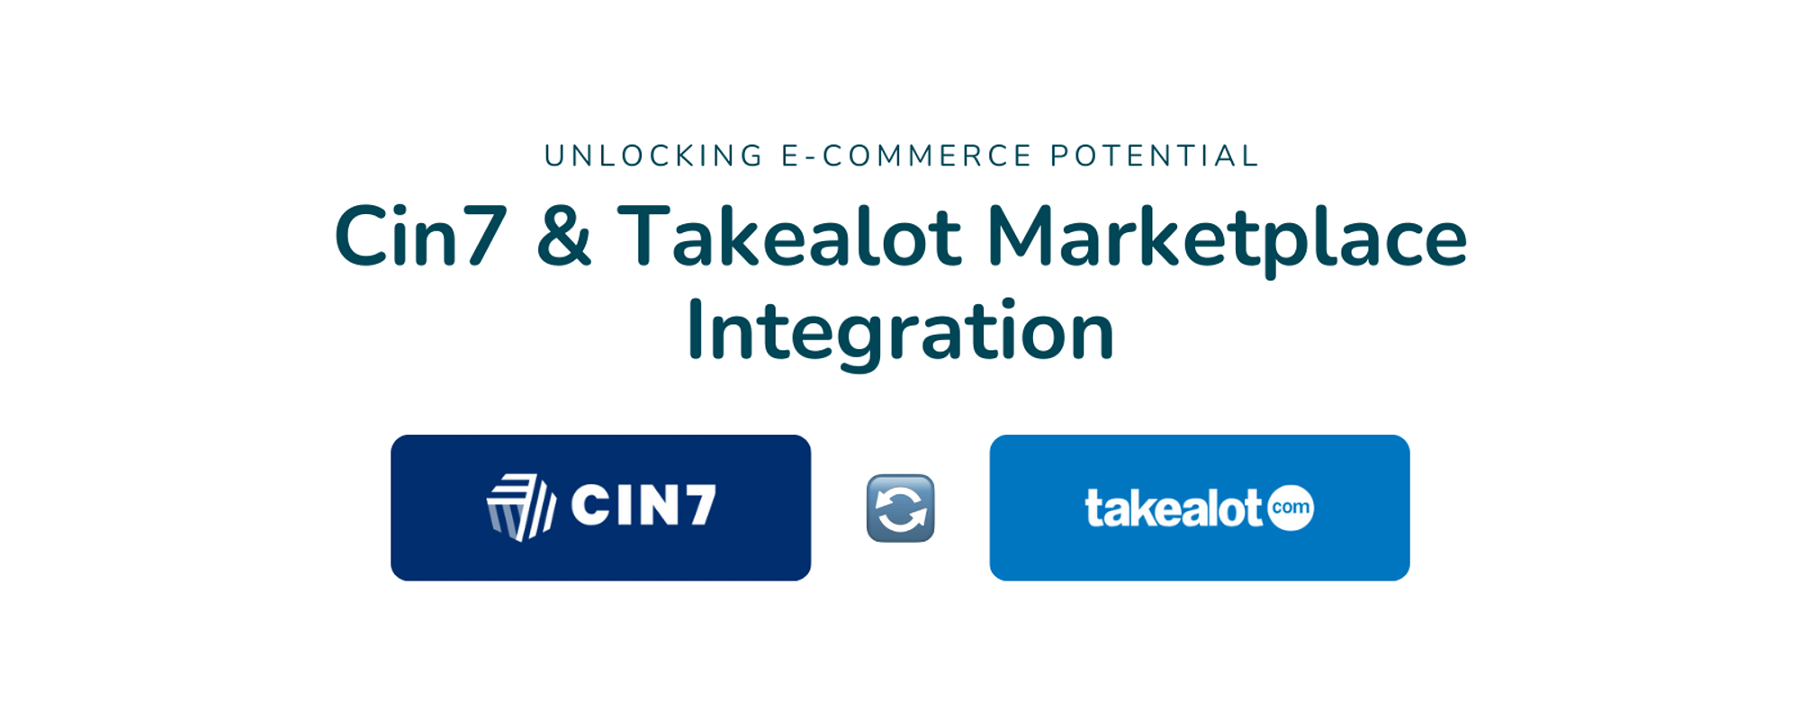 Cin7 & Takealot Marketplace Integration